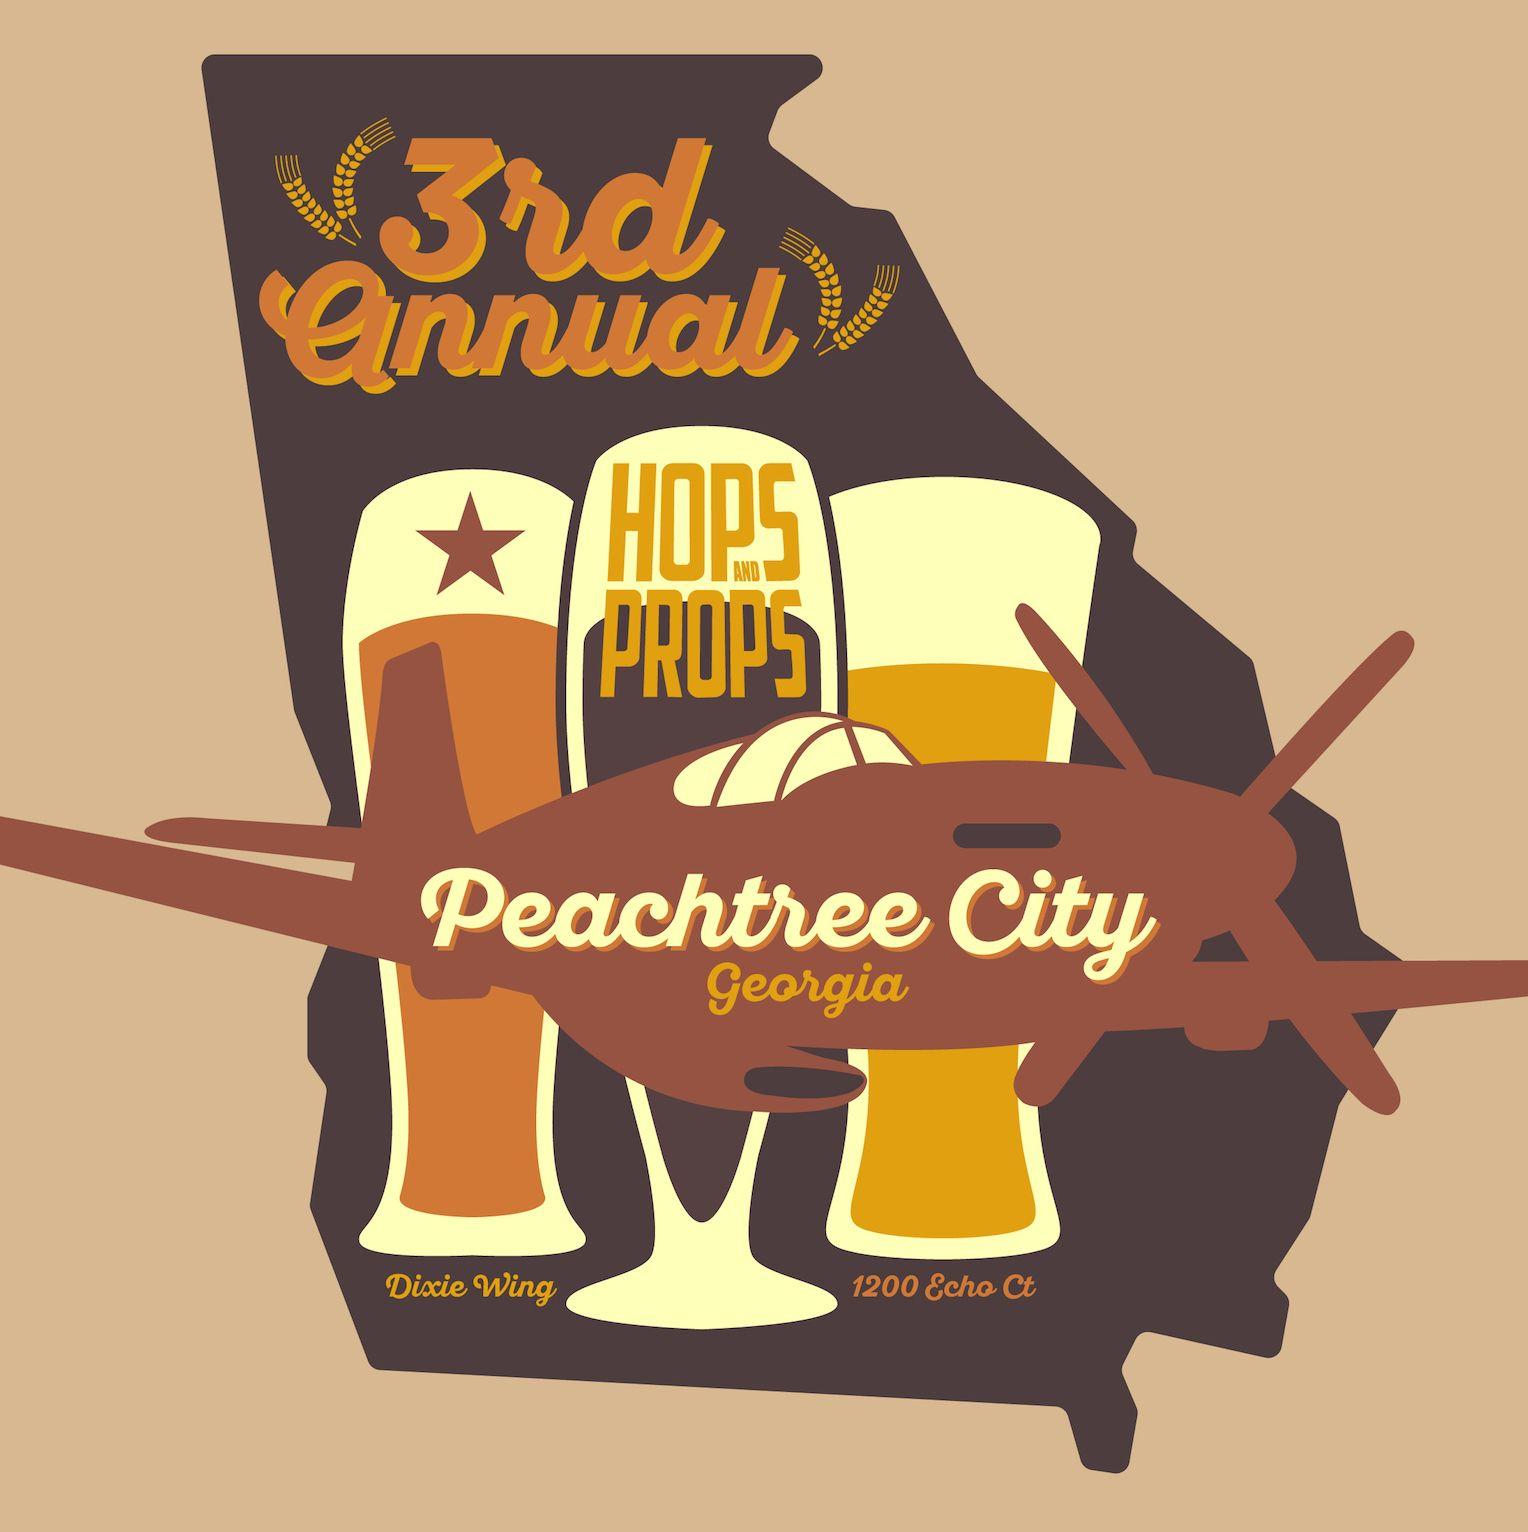 Georgia Beer Logo - Hops & Props Georgia Beer Fest - Peachtree City, Georgia Convention ...